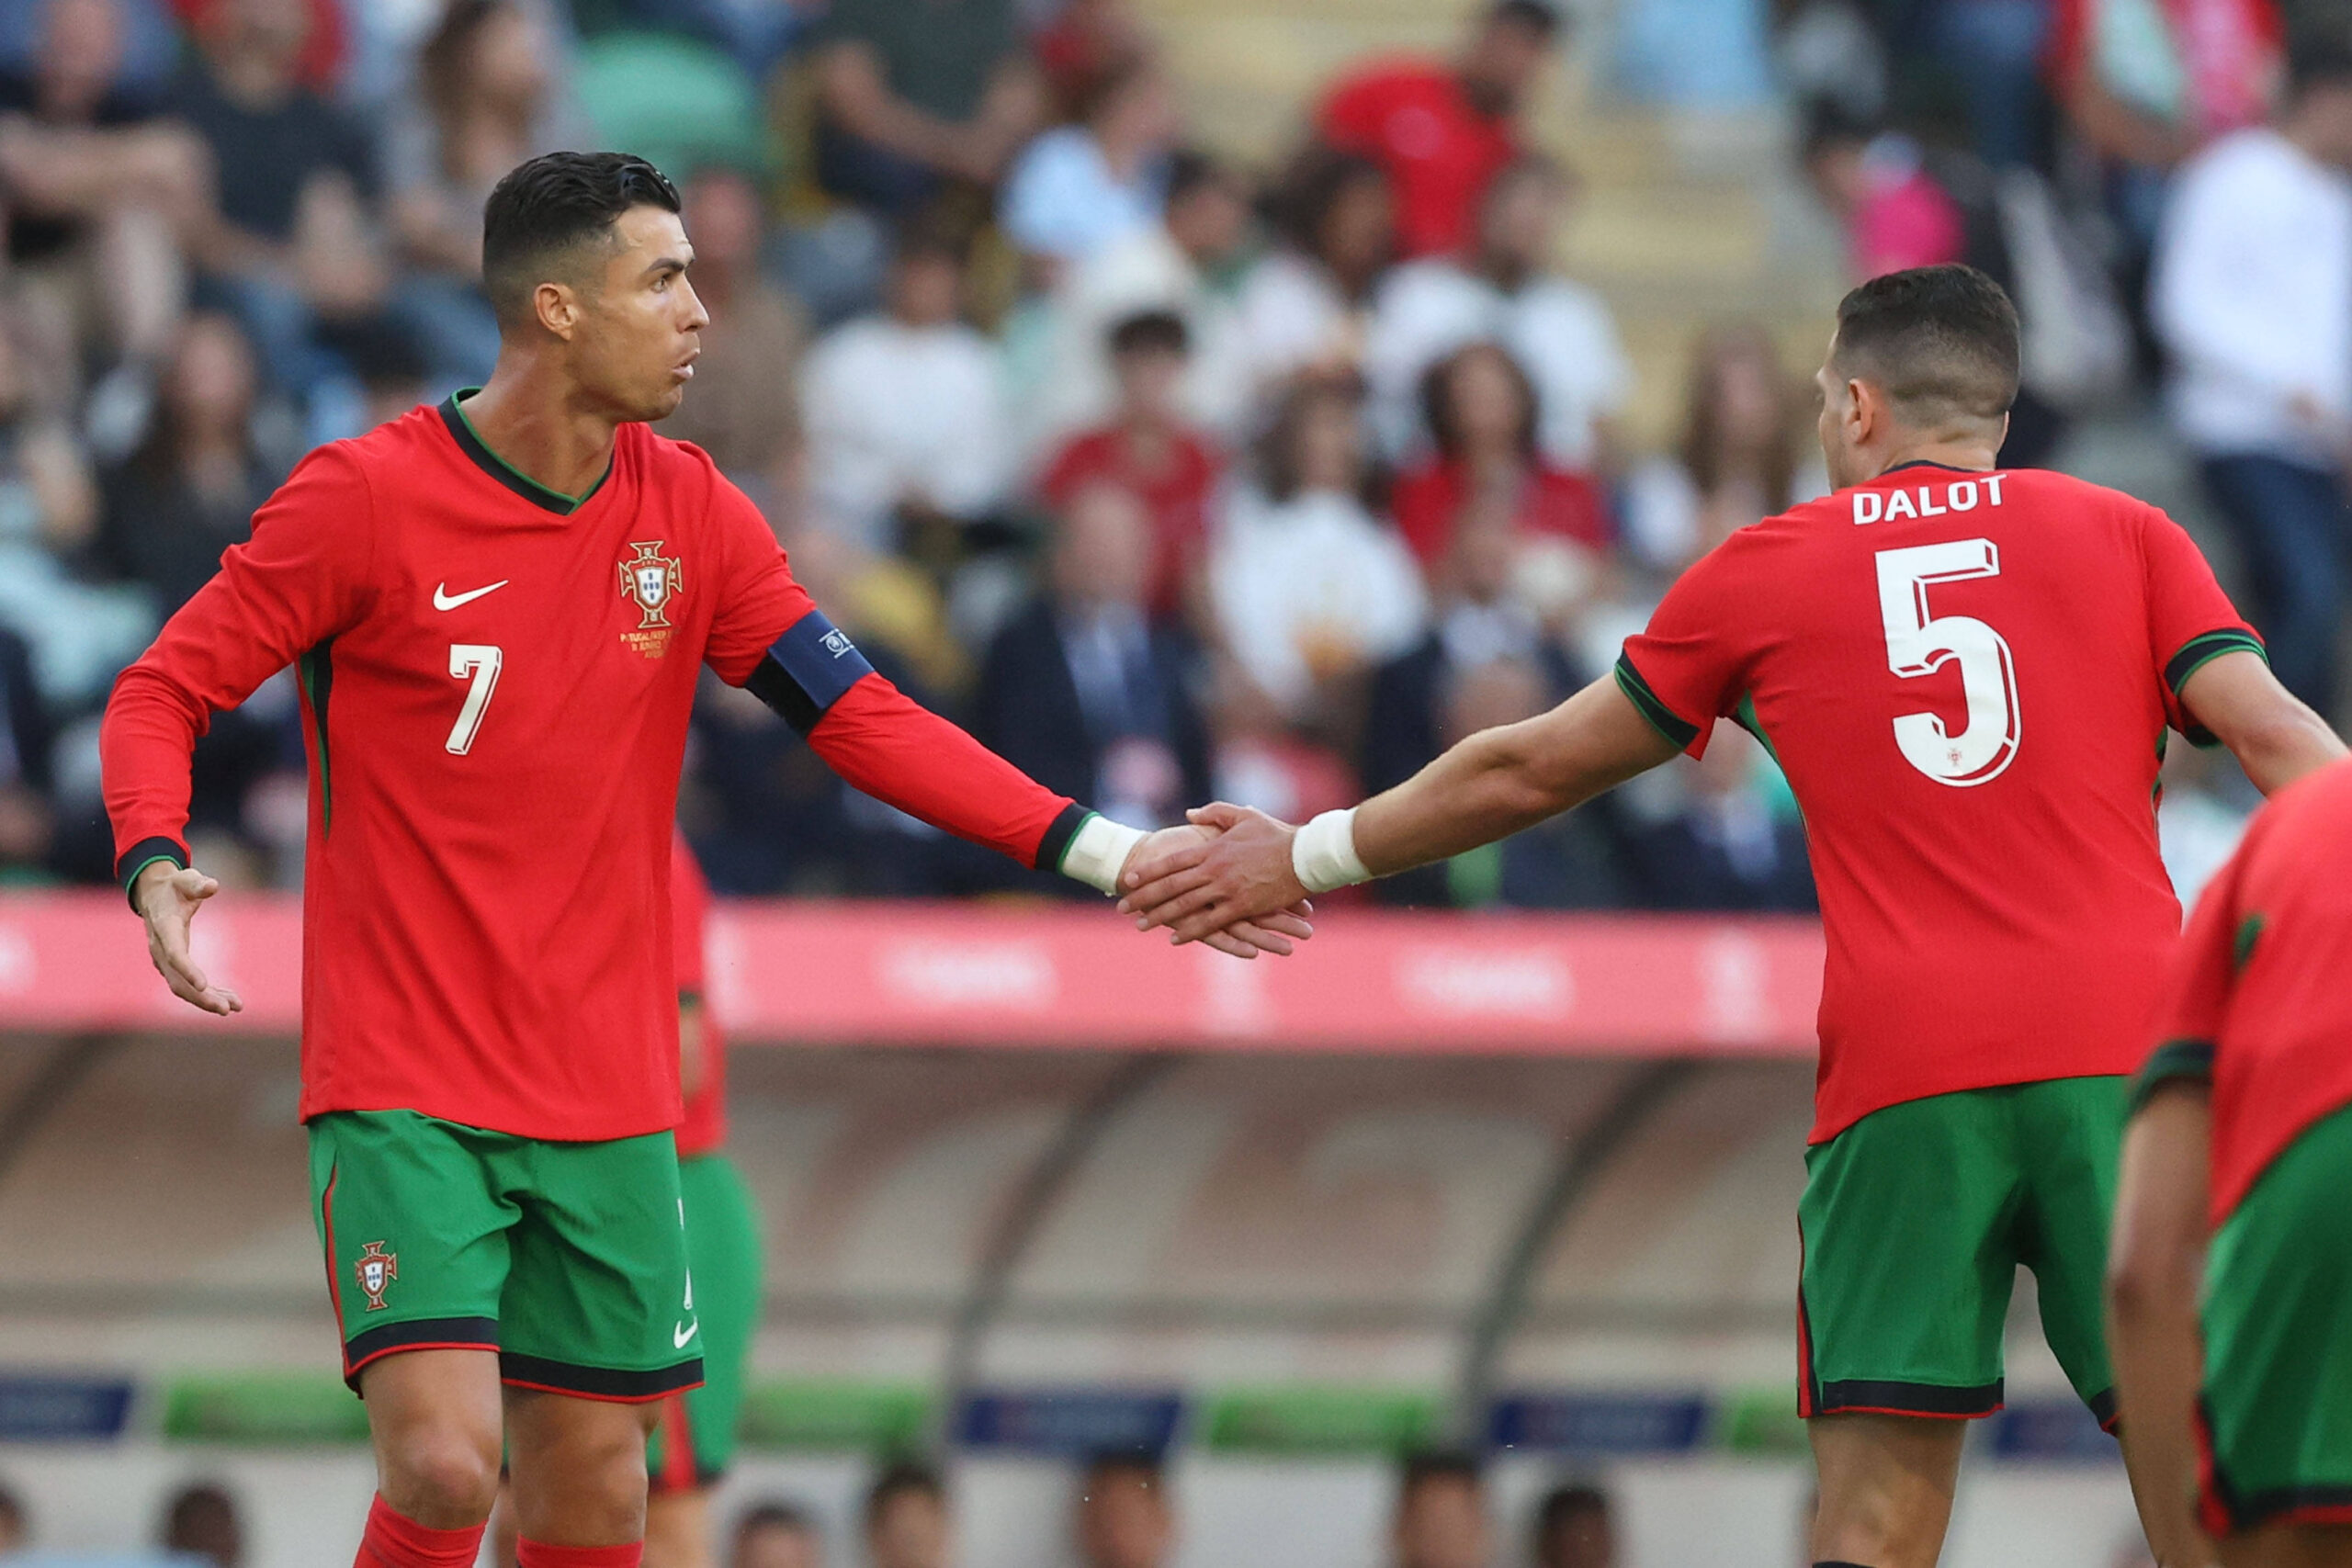 Cristiano Ronaldo and Diogo Dalot during a friendly match against Ireland.